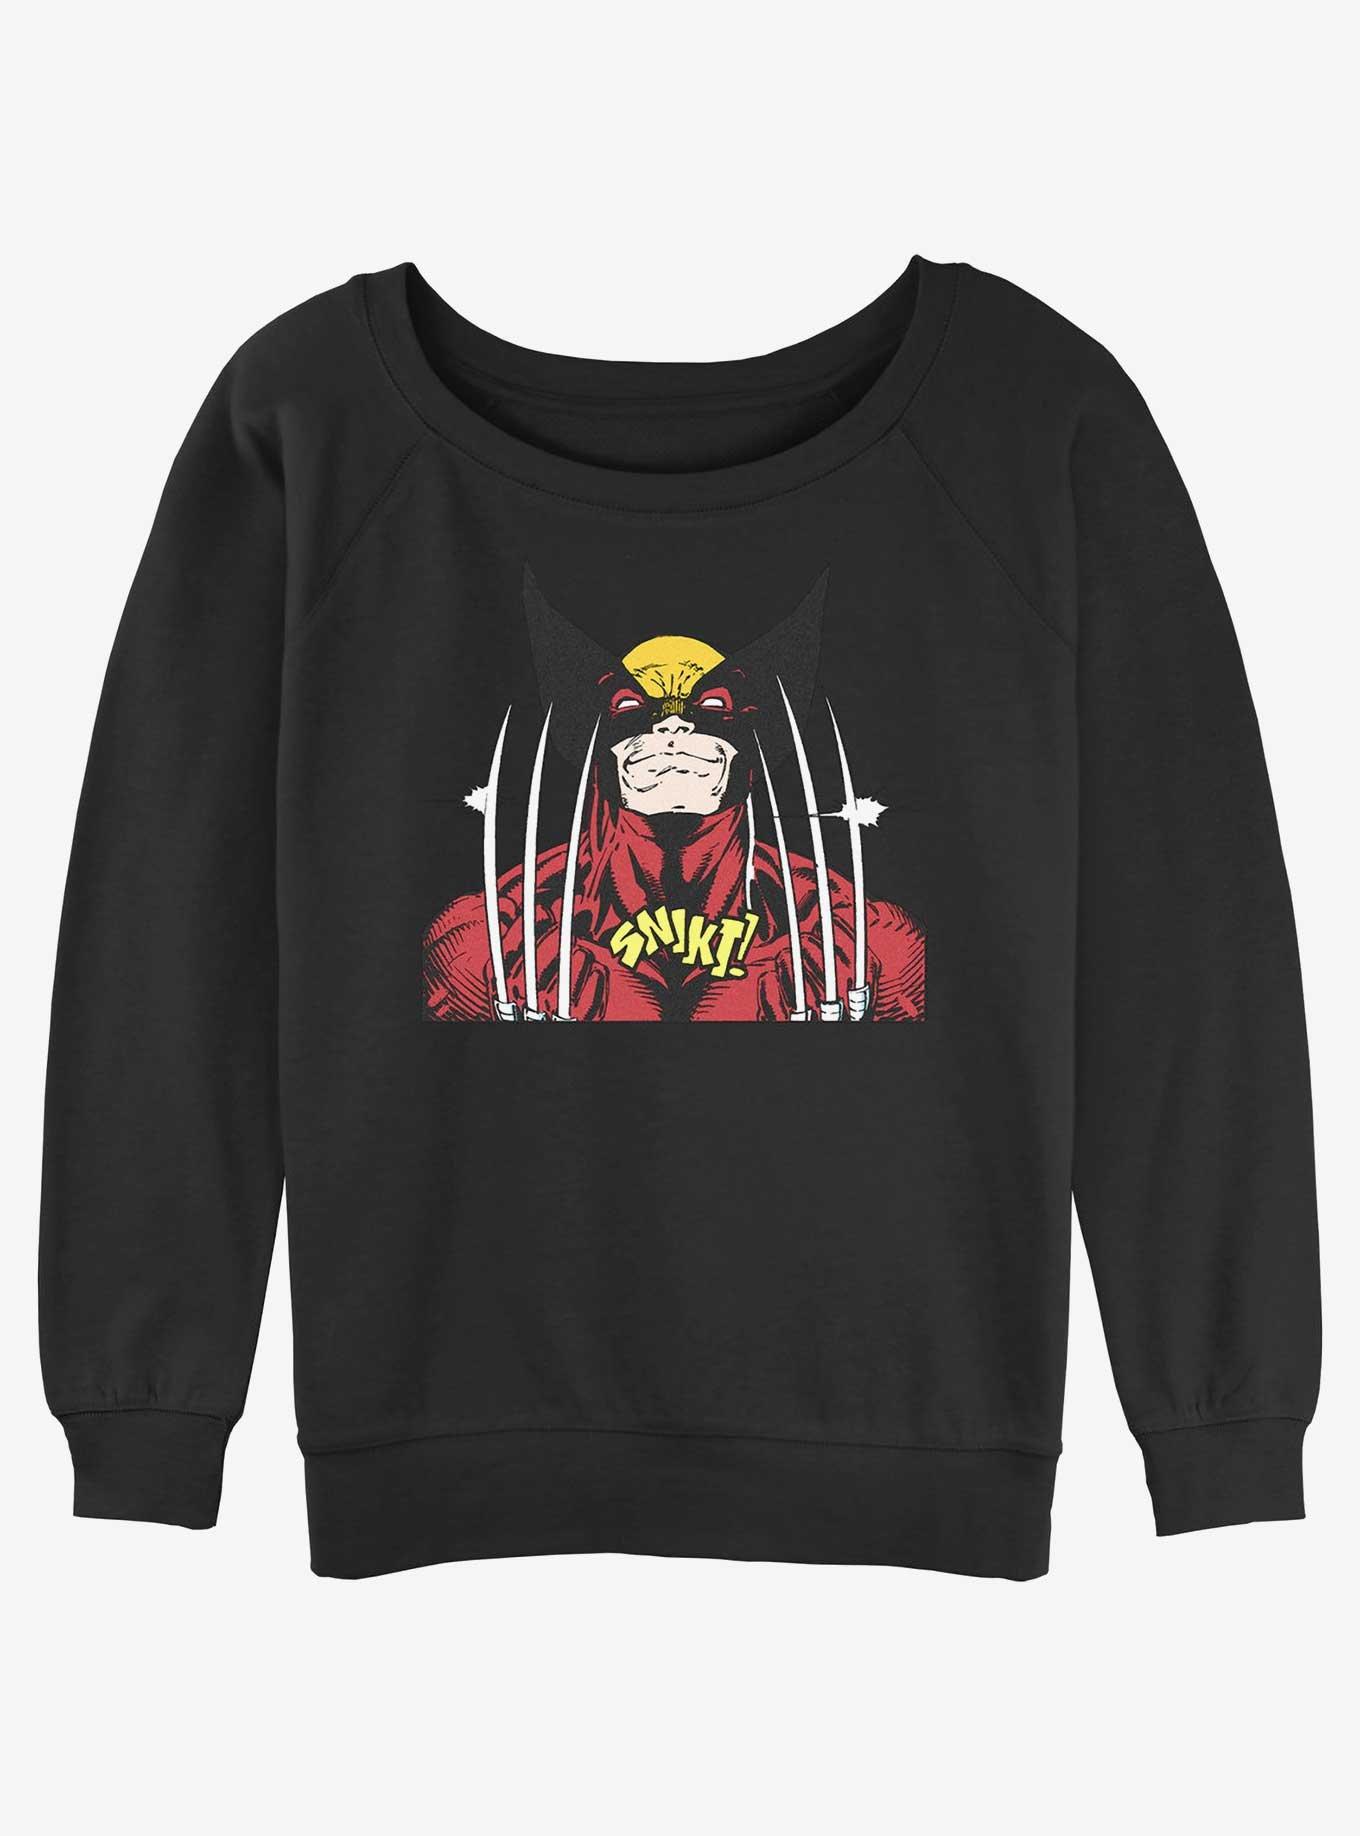 Wolverine Bring The Claws Girls Slouchy Sweatshirt, BLACK, hi-res